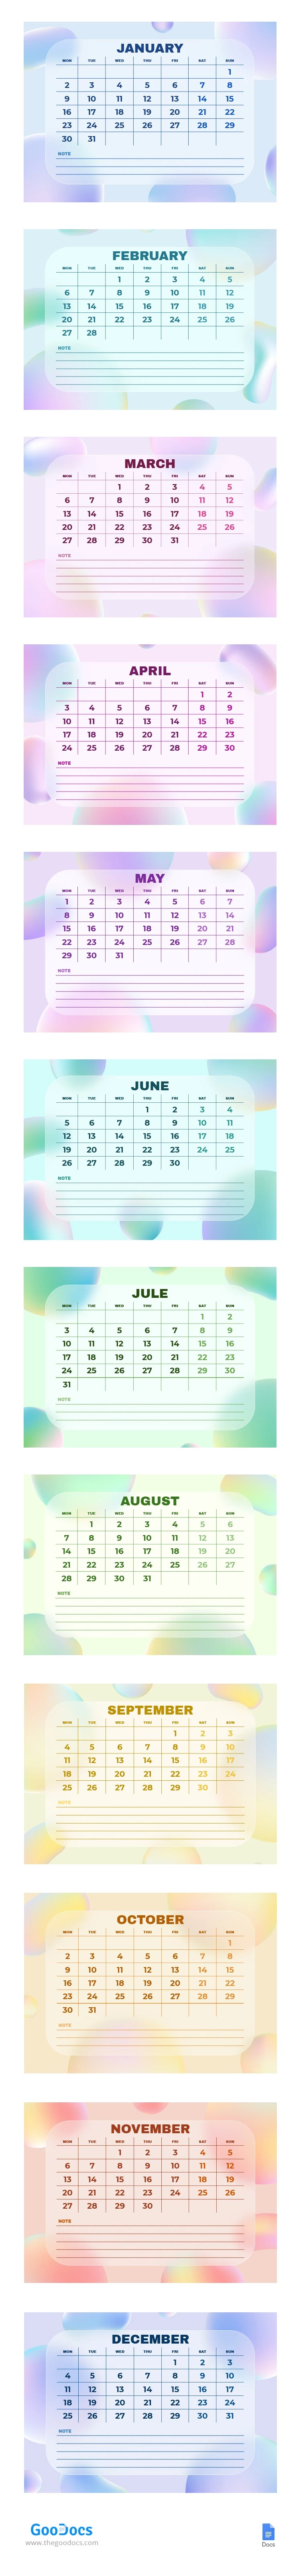 Calendario astratto 2023 - free Google Docs Template - 10064227